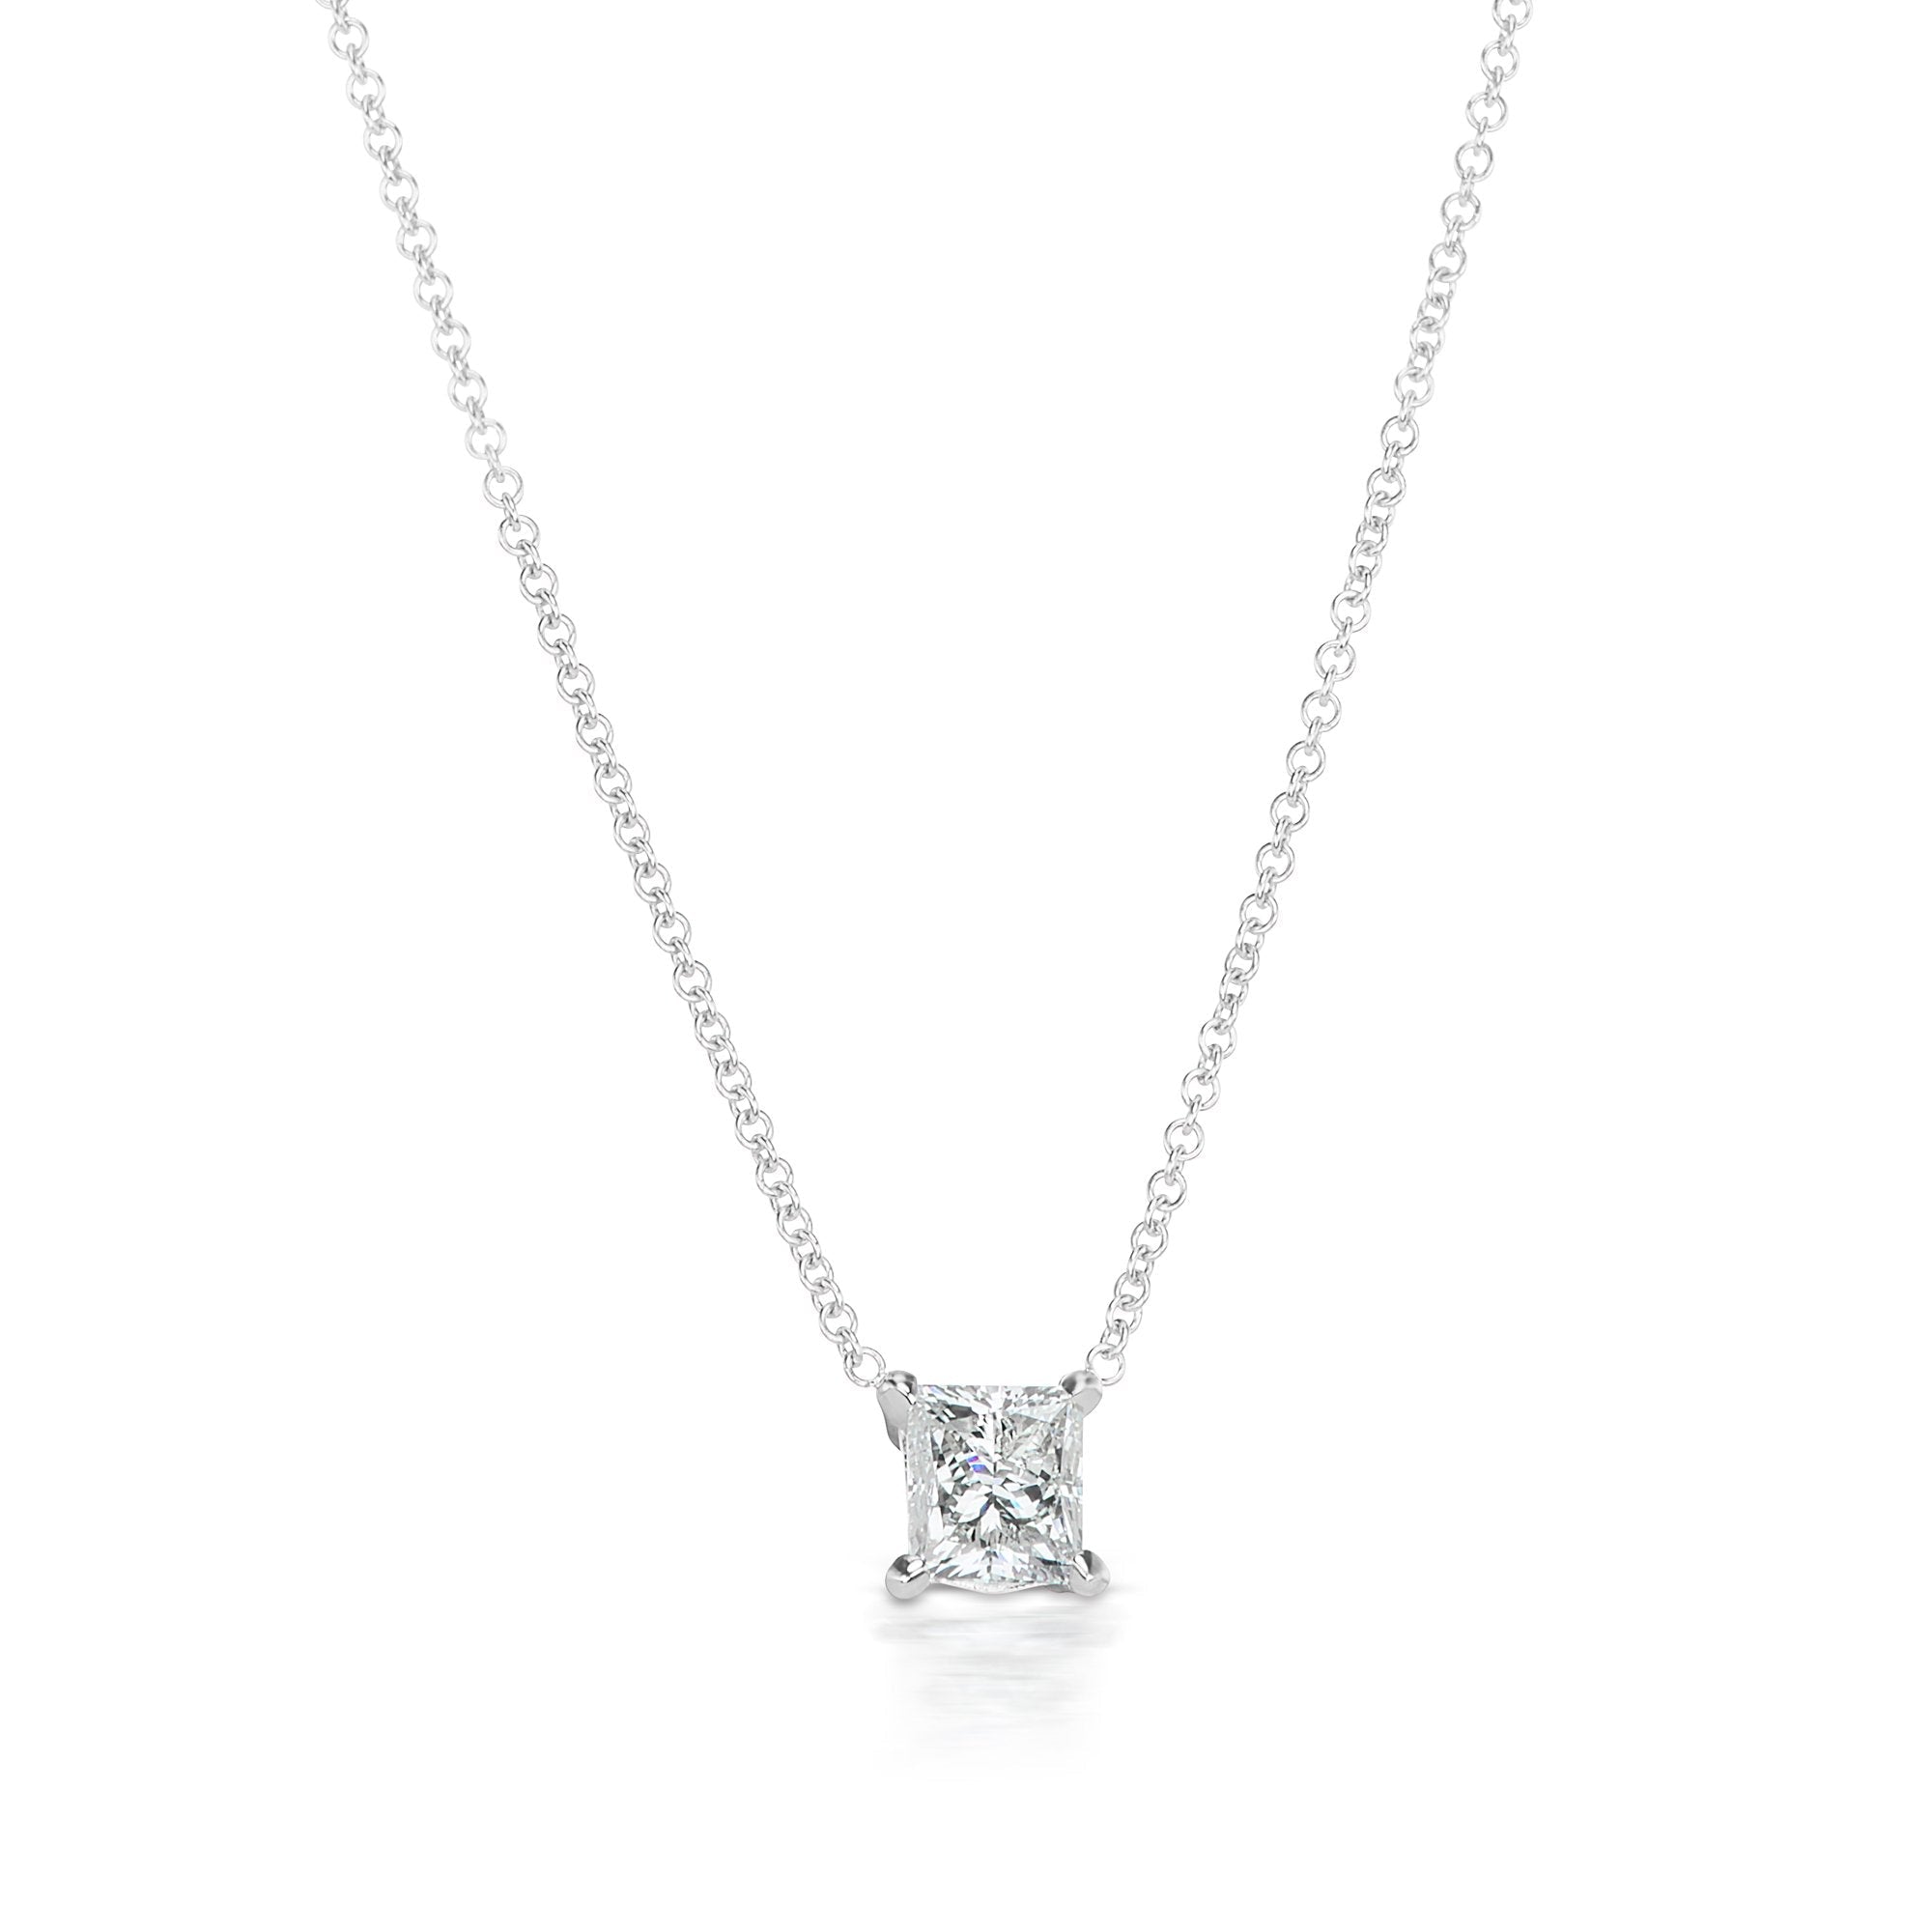 Nekta New York 1 Carat Princess Cut Diamond Necklace